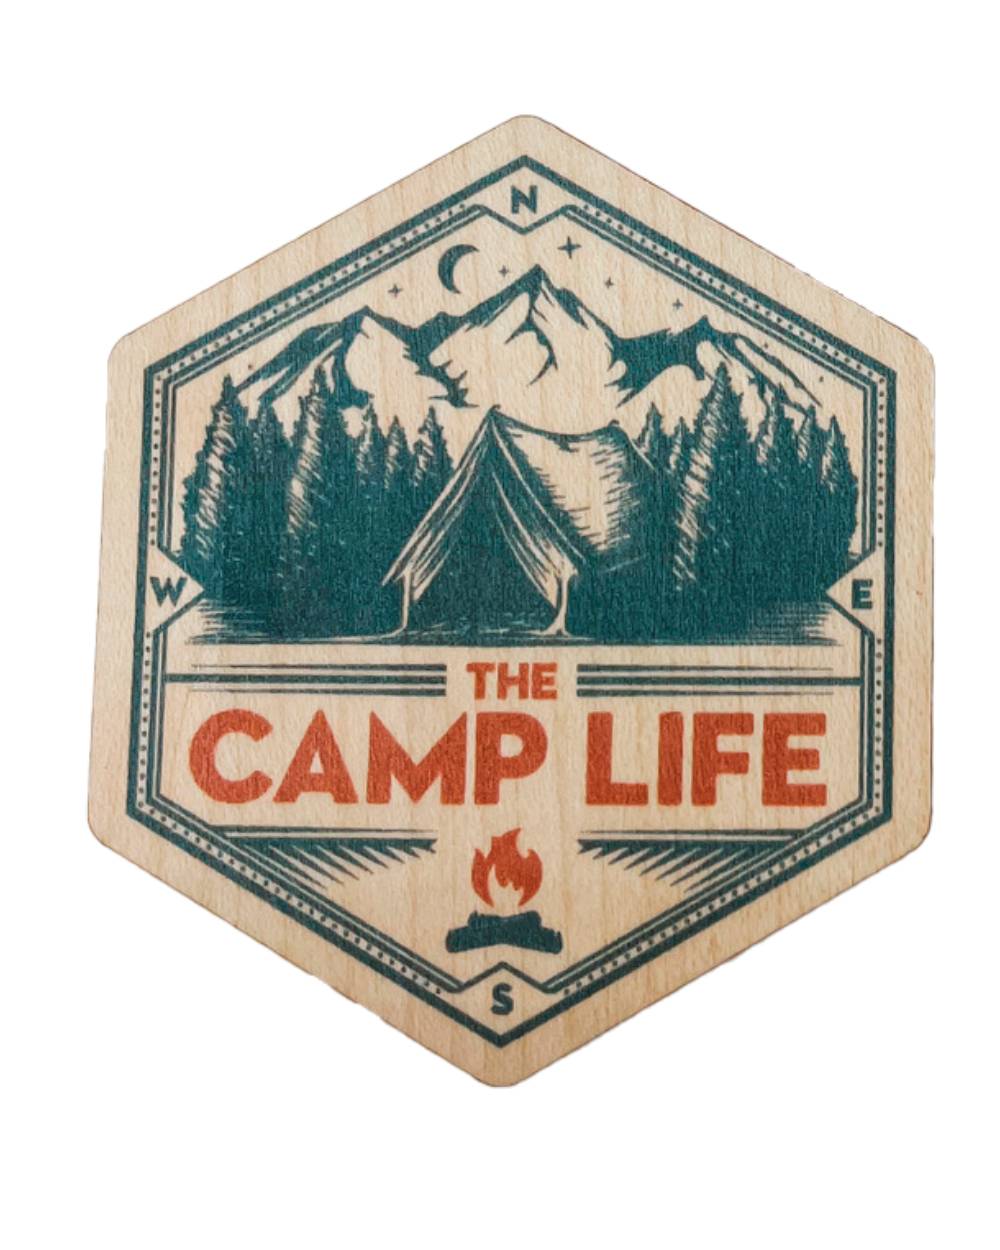 Autoaufkleber Camping Life